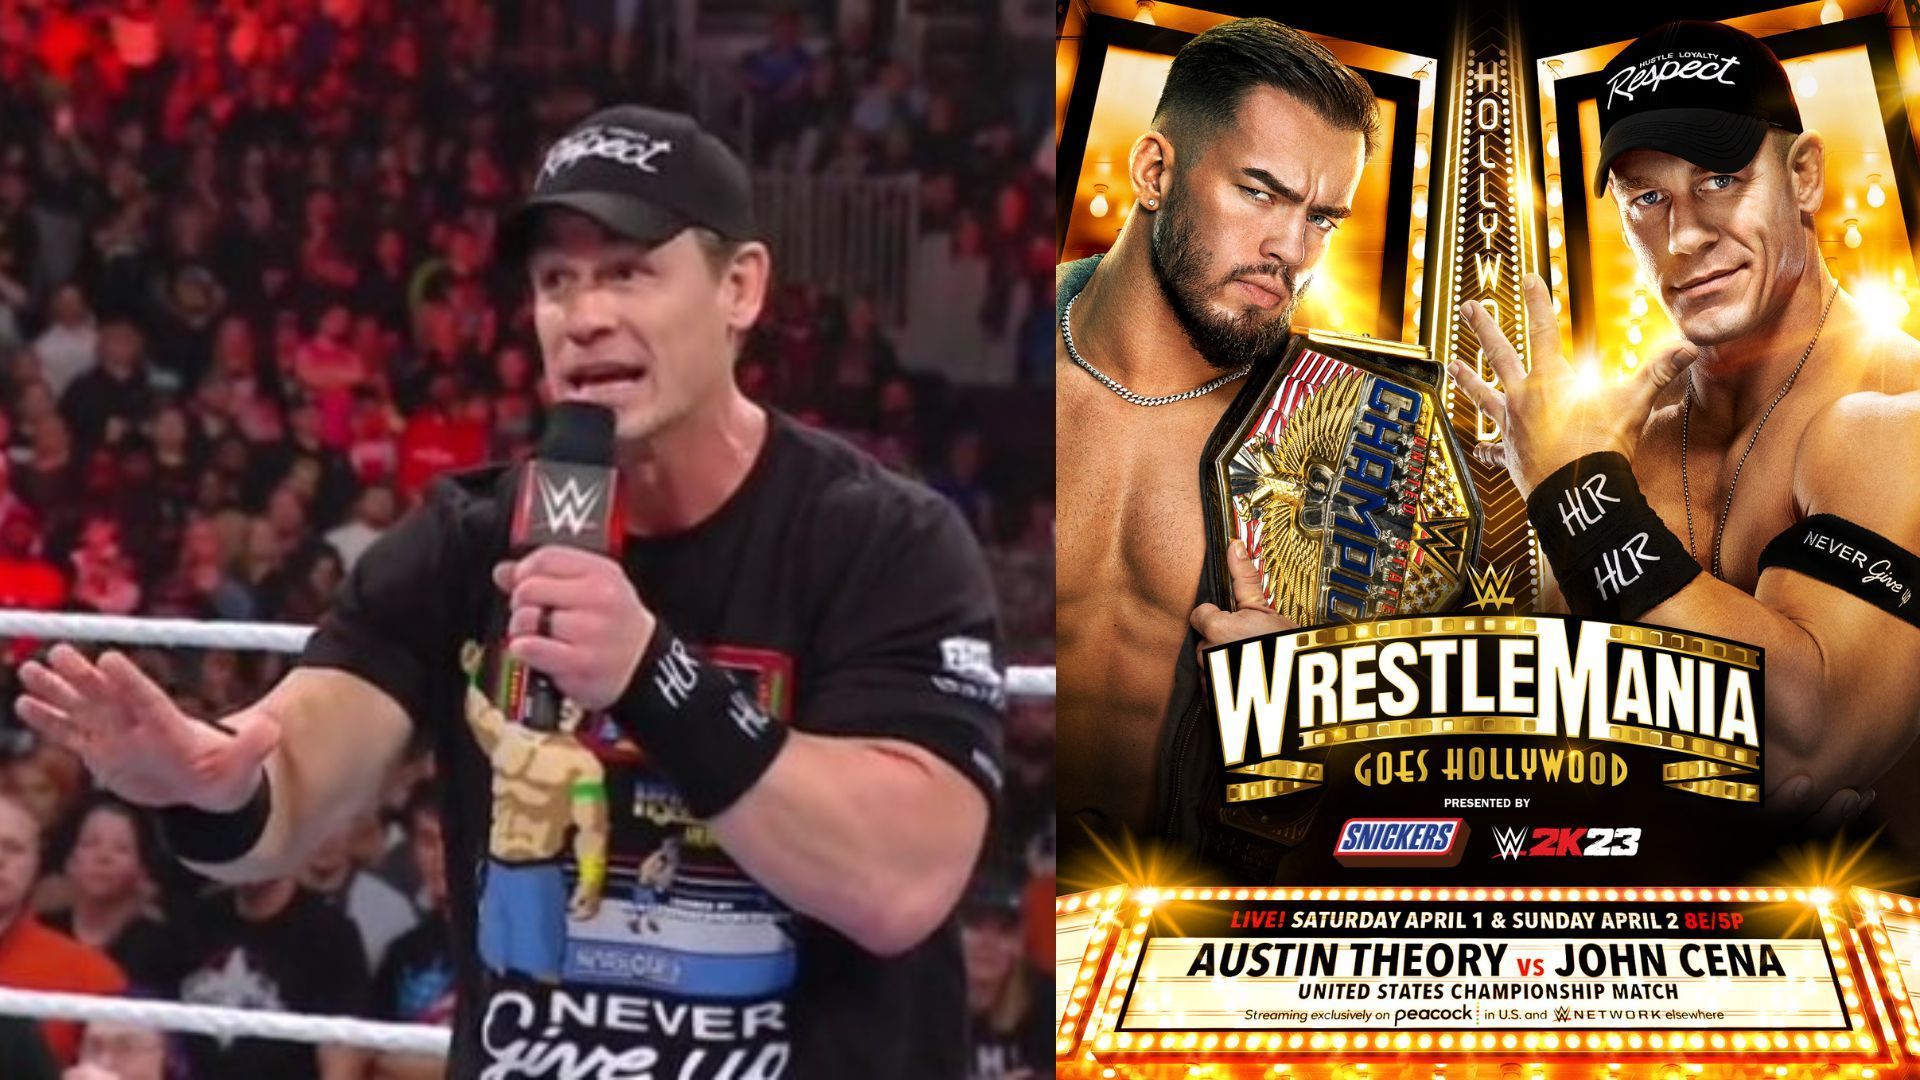 John Cena vs. Austin Theory is set for WrestleMania